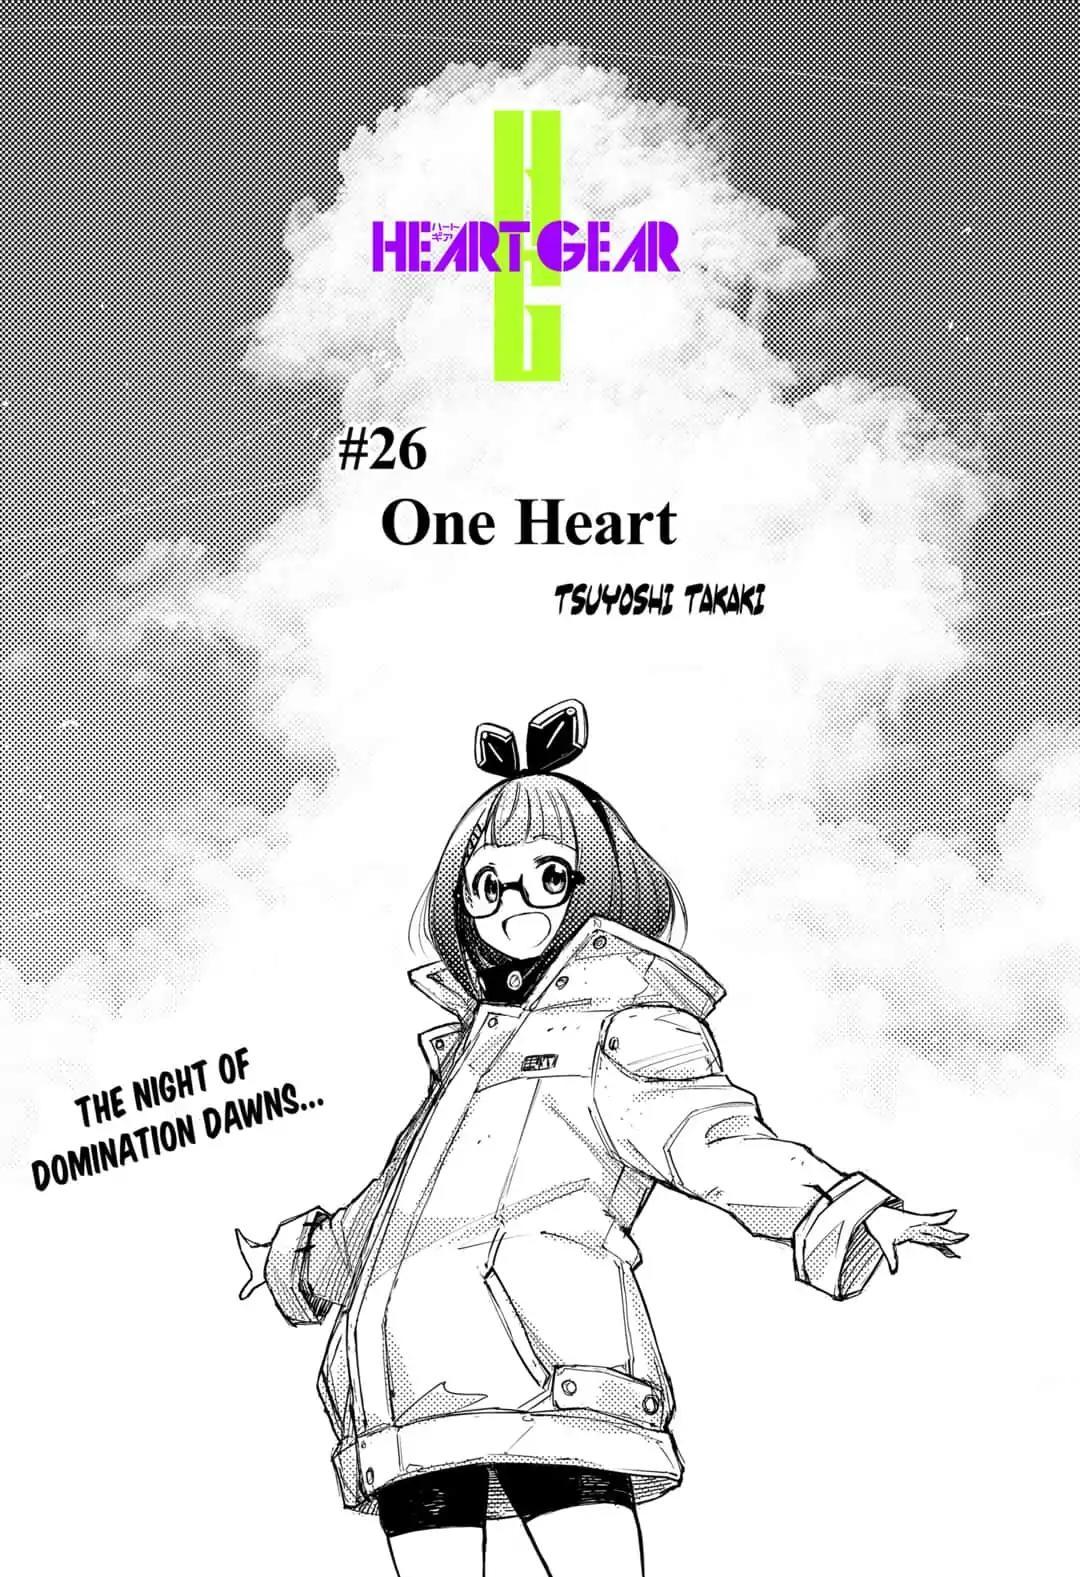 Heart Gear #26 One Heart - Picture 2